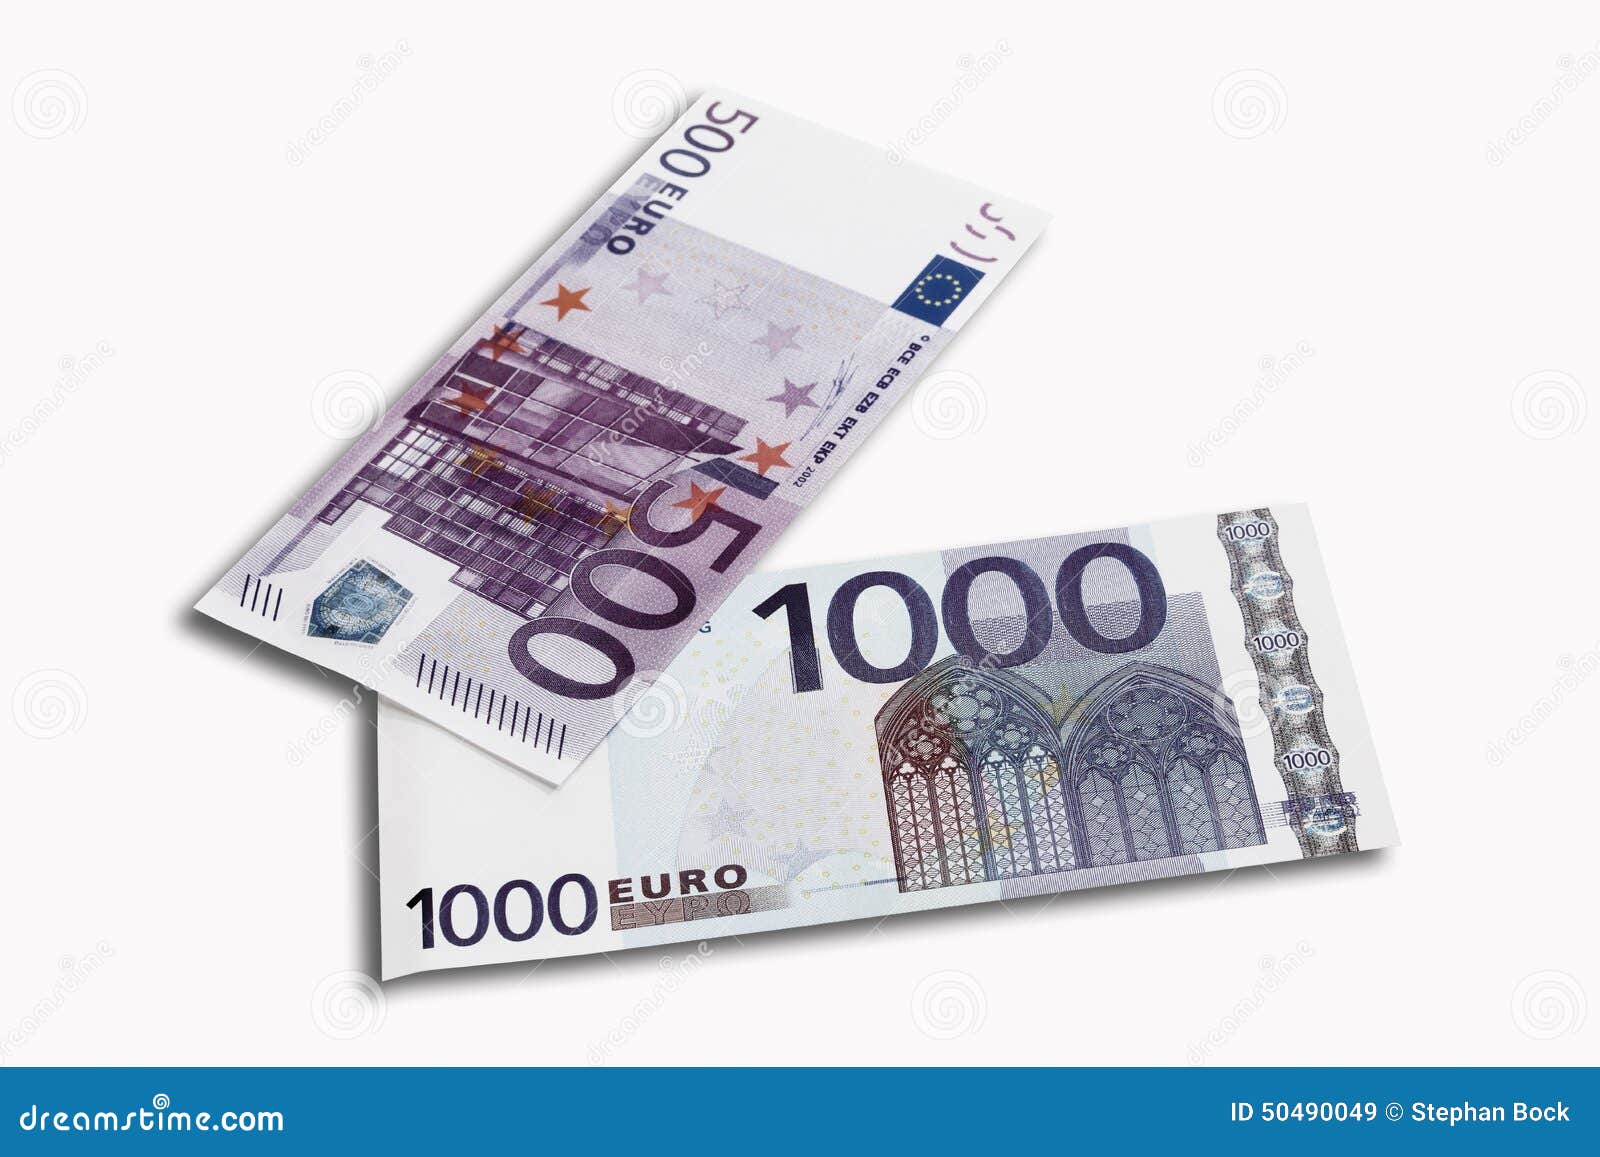 317 тысяч евро в рублях. 1000 Евро. Евро номинал 1000. 500 1000 Еуро. 1000 Euro Bill.